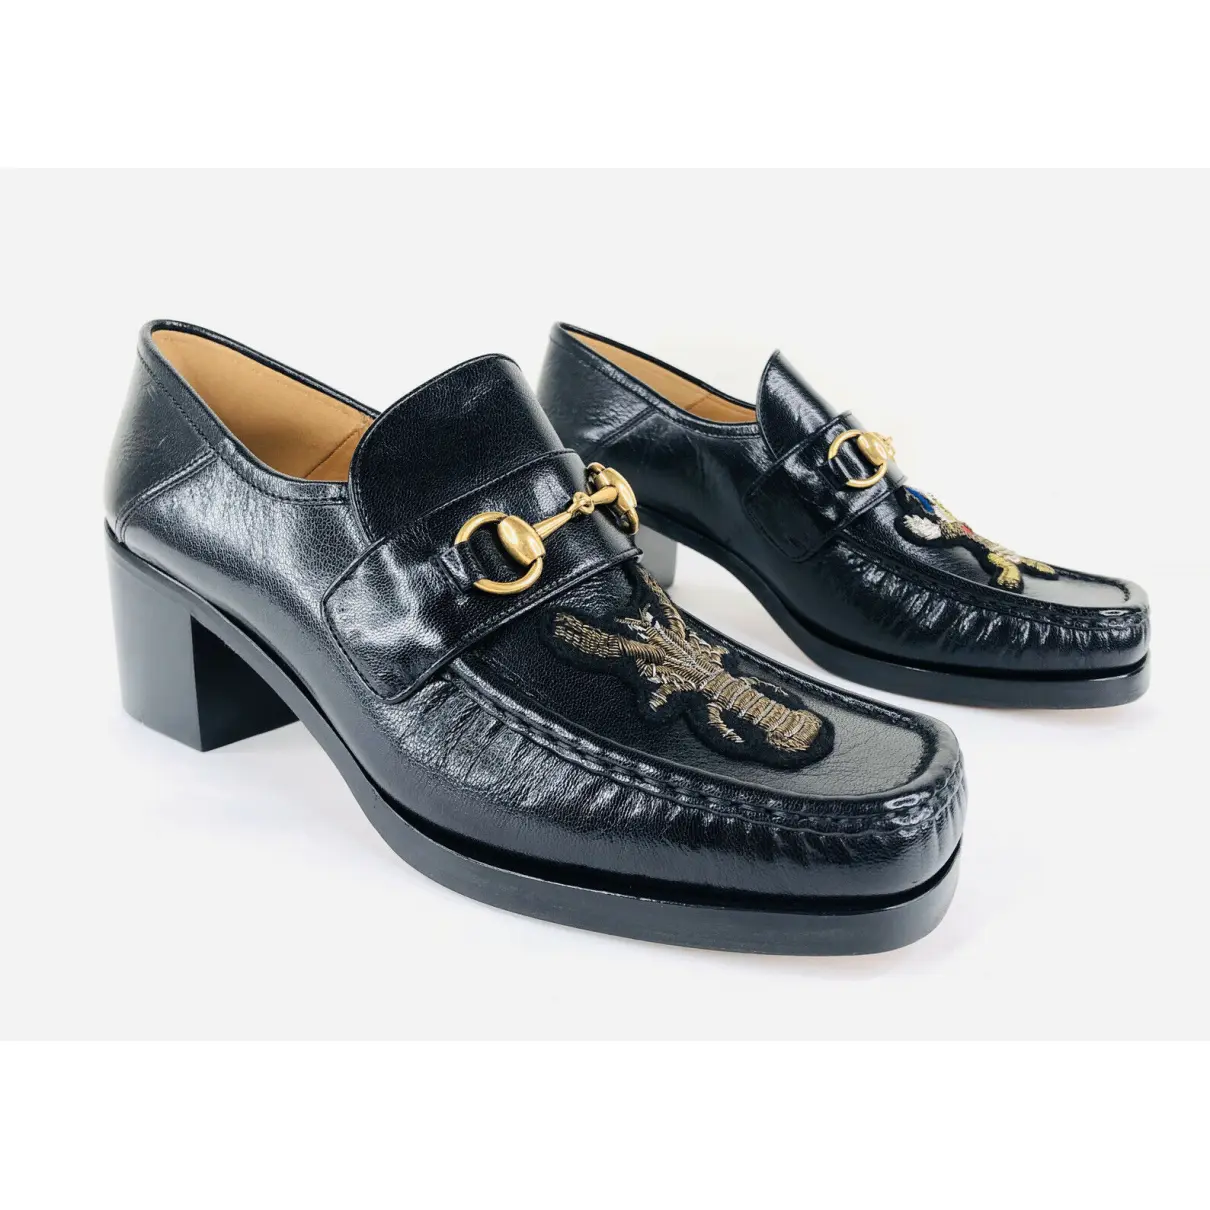 Vegas leather heels Gucci